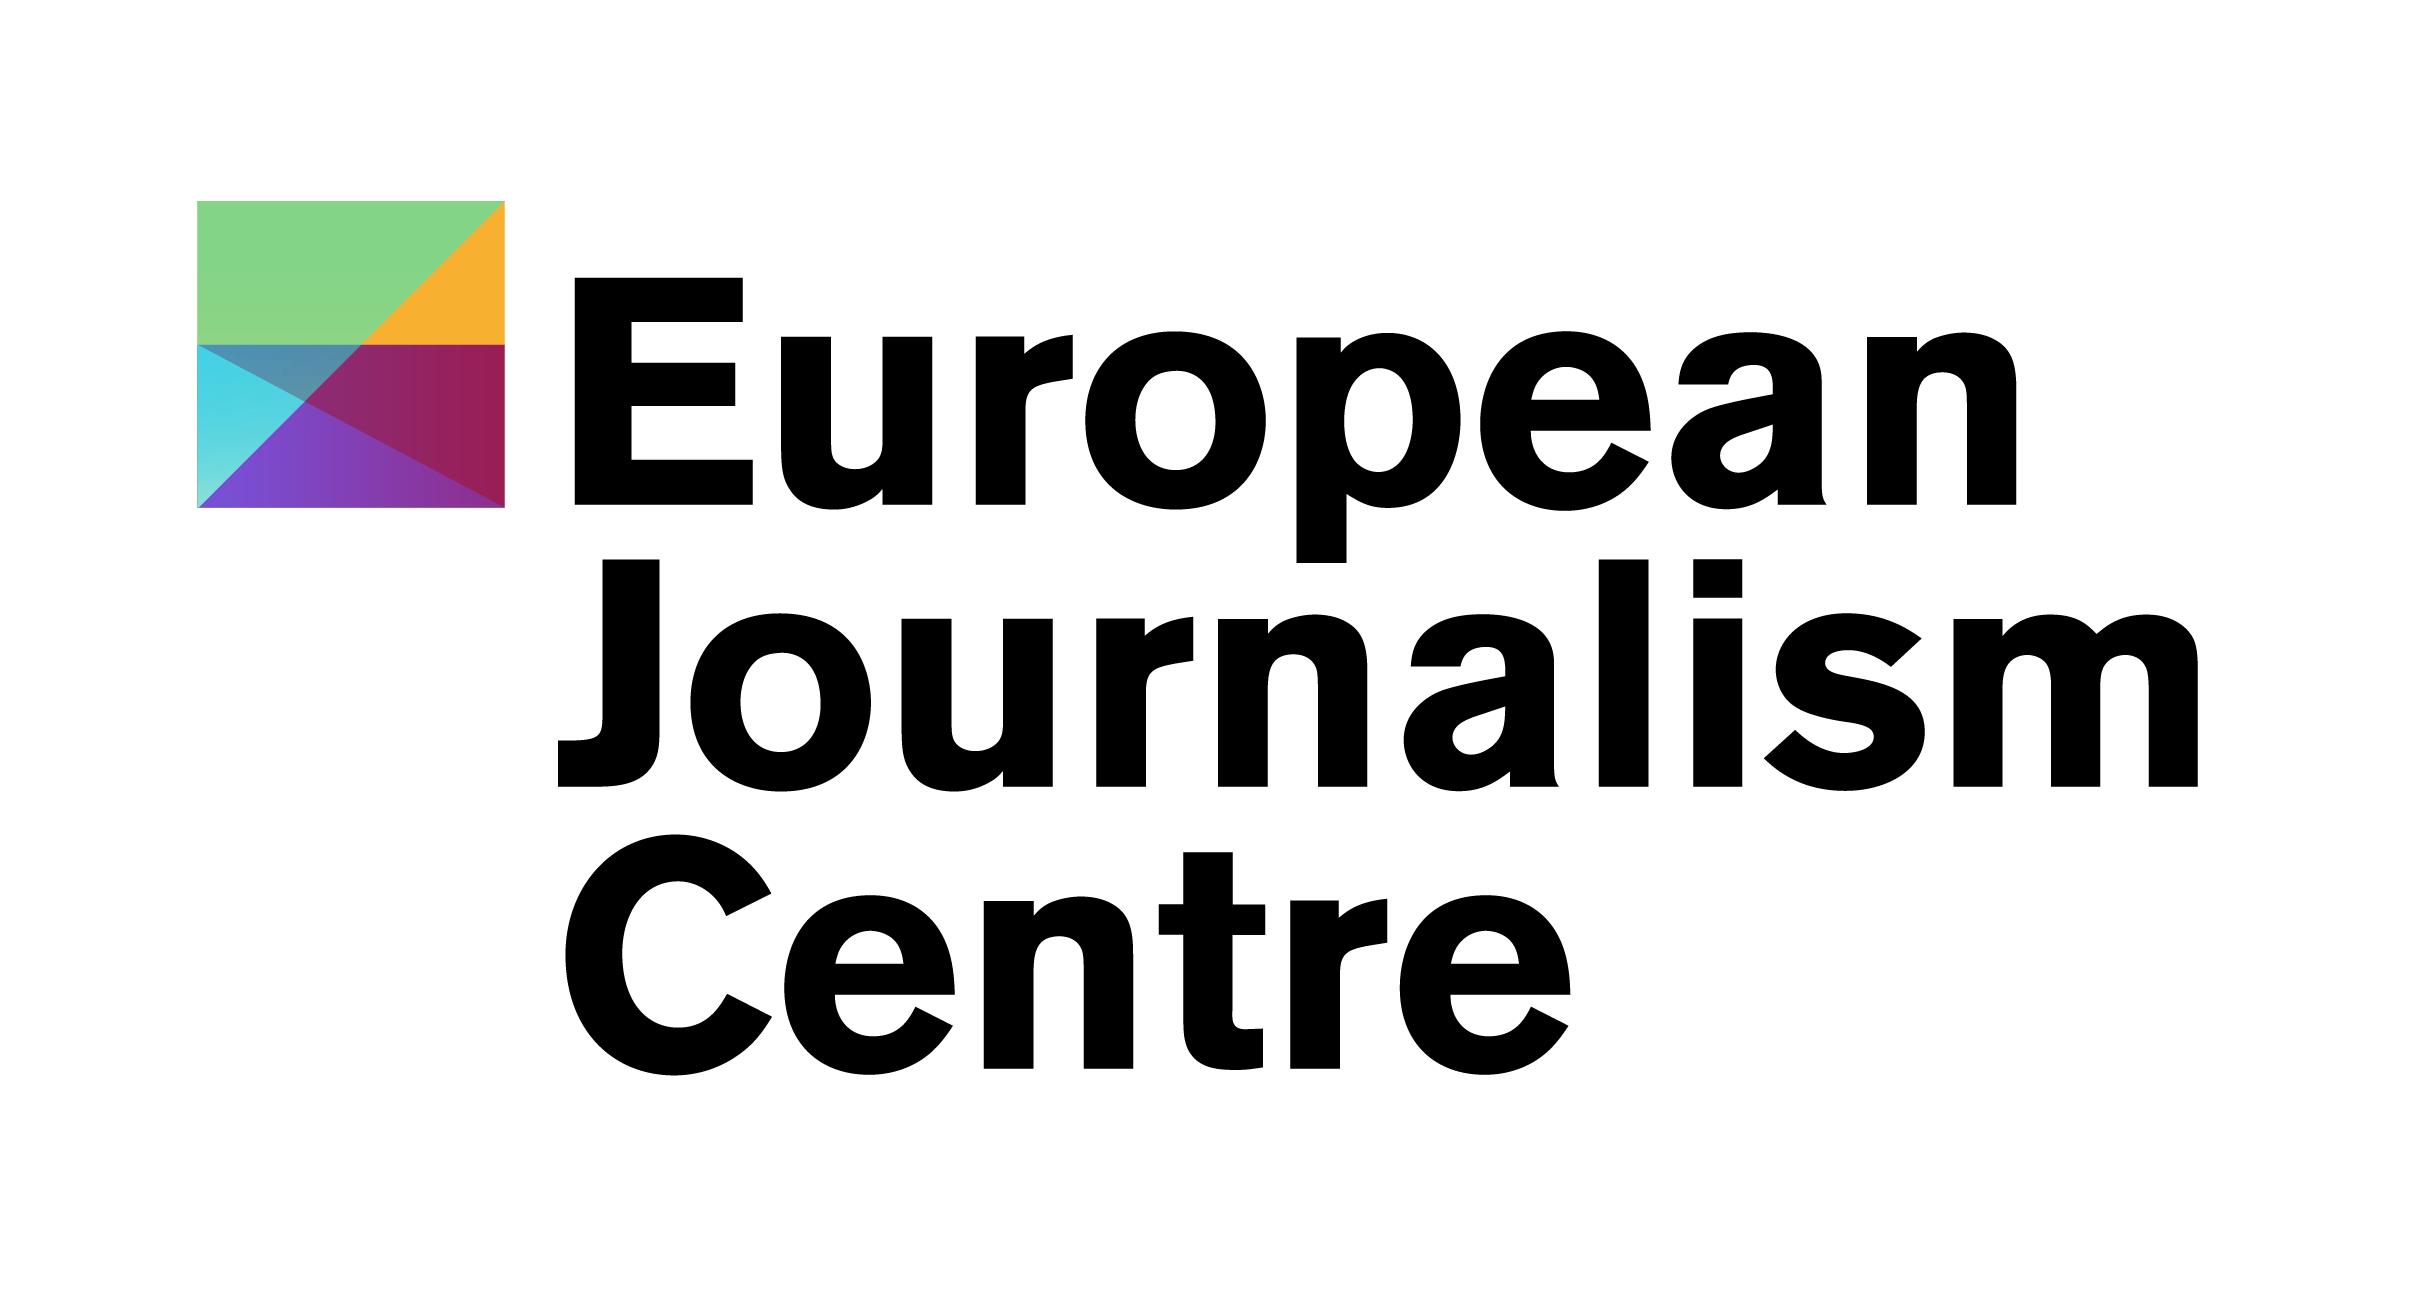 The European Journalism Centre